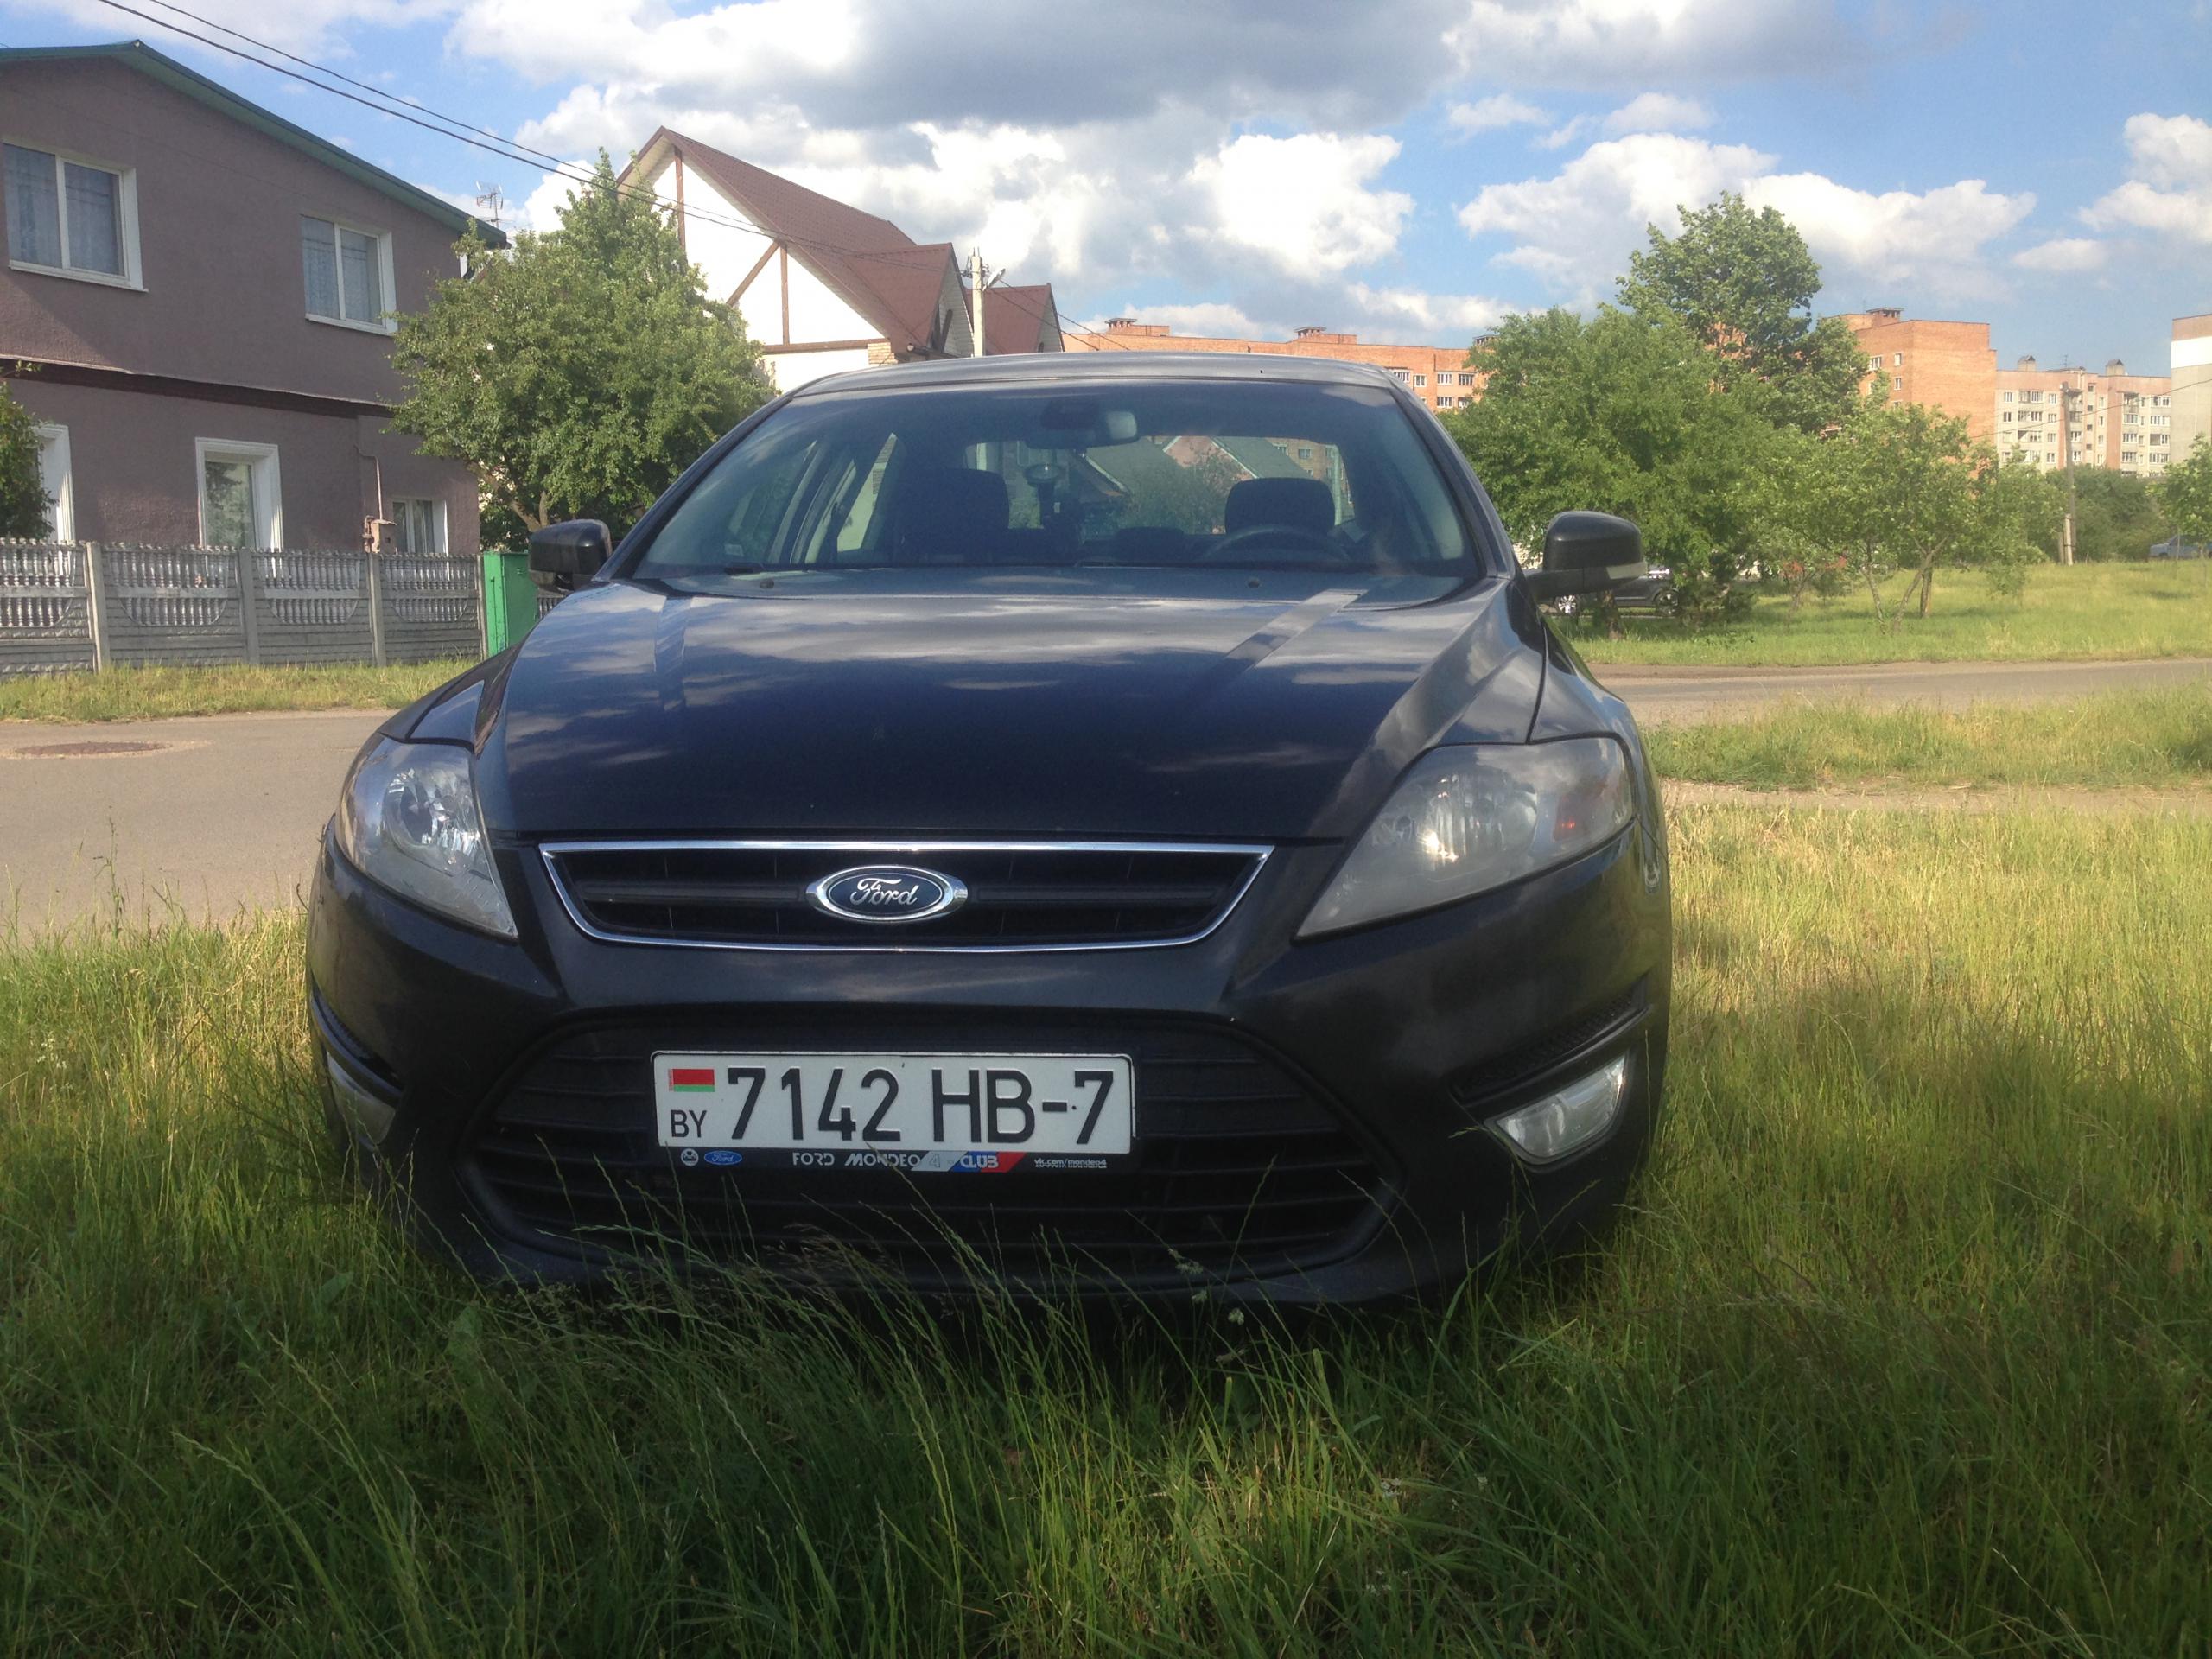 Разборки Ford (Форд) в Москве и Московской области